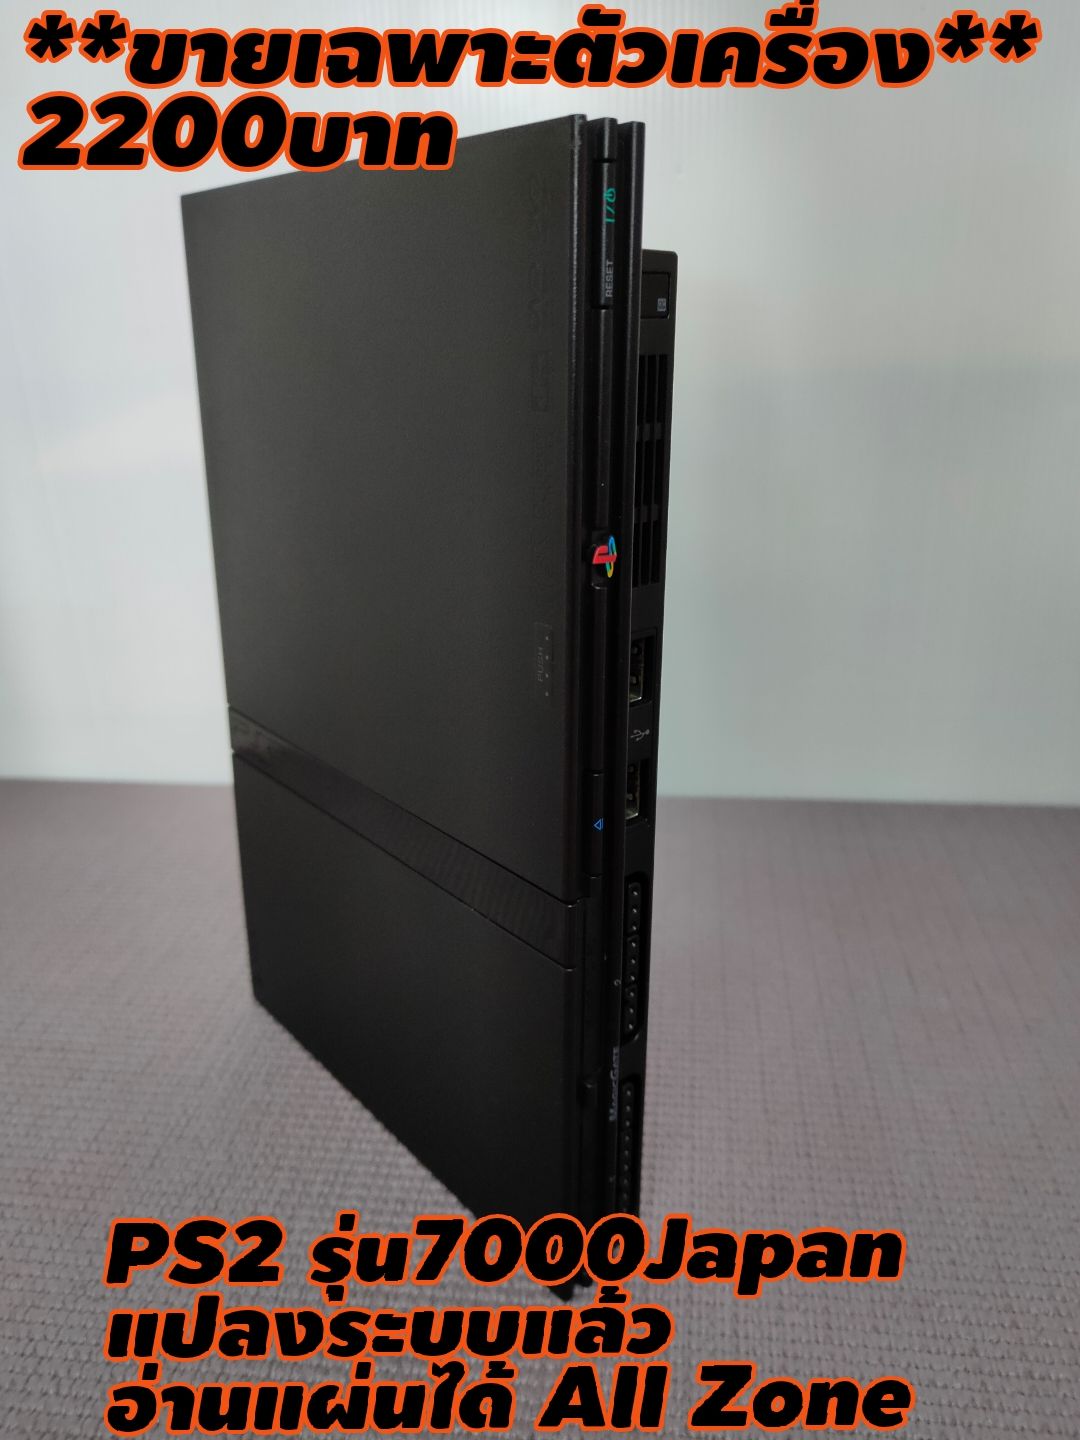 PS2 รุ่น7000Japanแปลงระบบแล้ว อ่านแผ่นได้All Zone **ขายเฉพาะตัวเครื่อง**